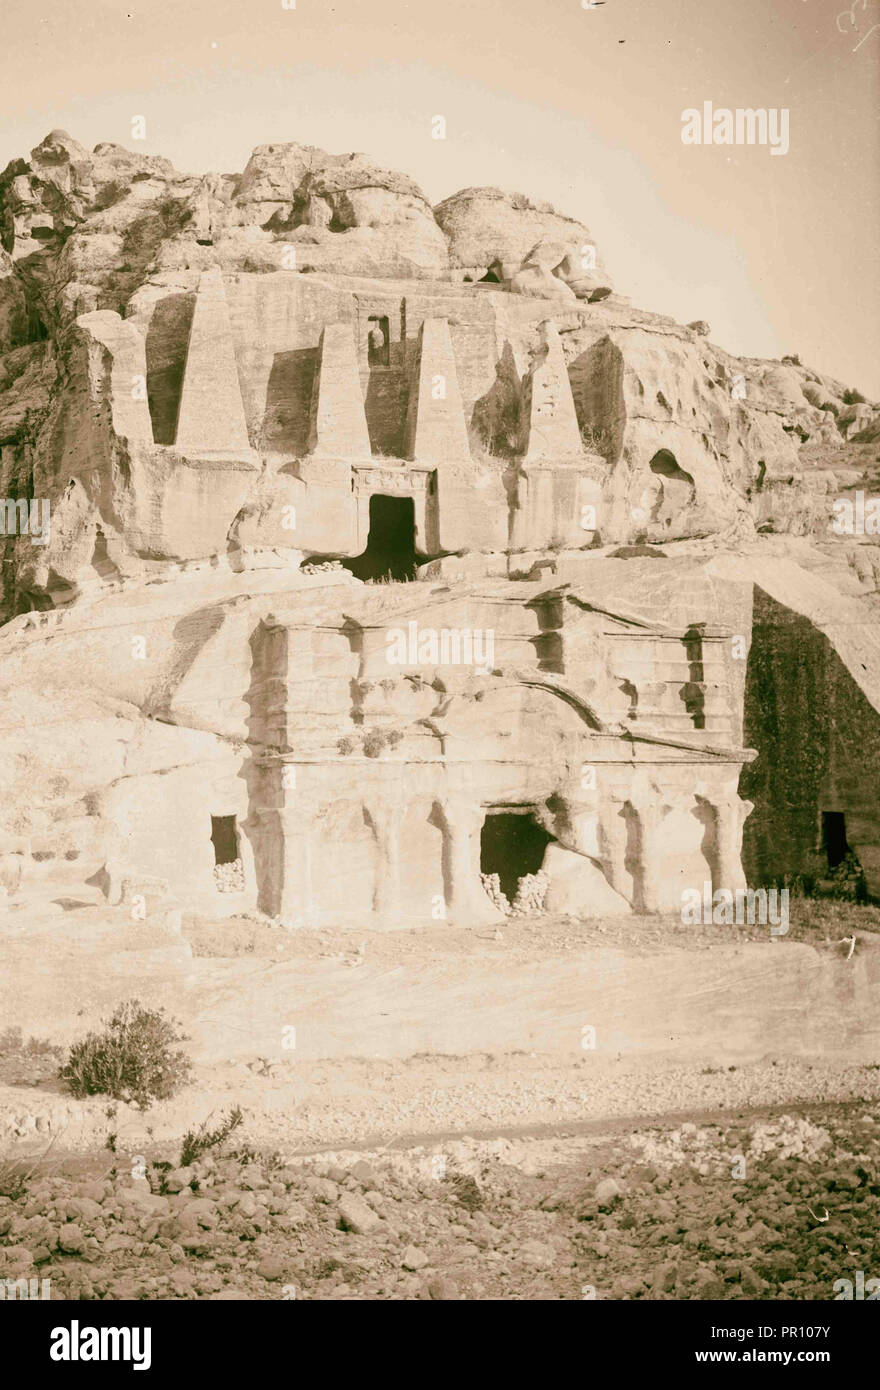 Petra en Transjordanie. Tombeau avec les obélisques. 1900, Jordanie, Petra, la ville disparue Banque D'Images